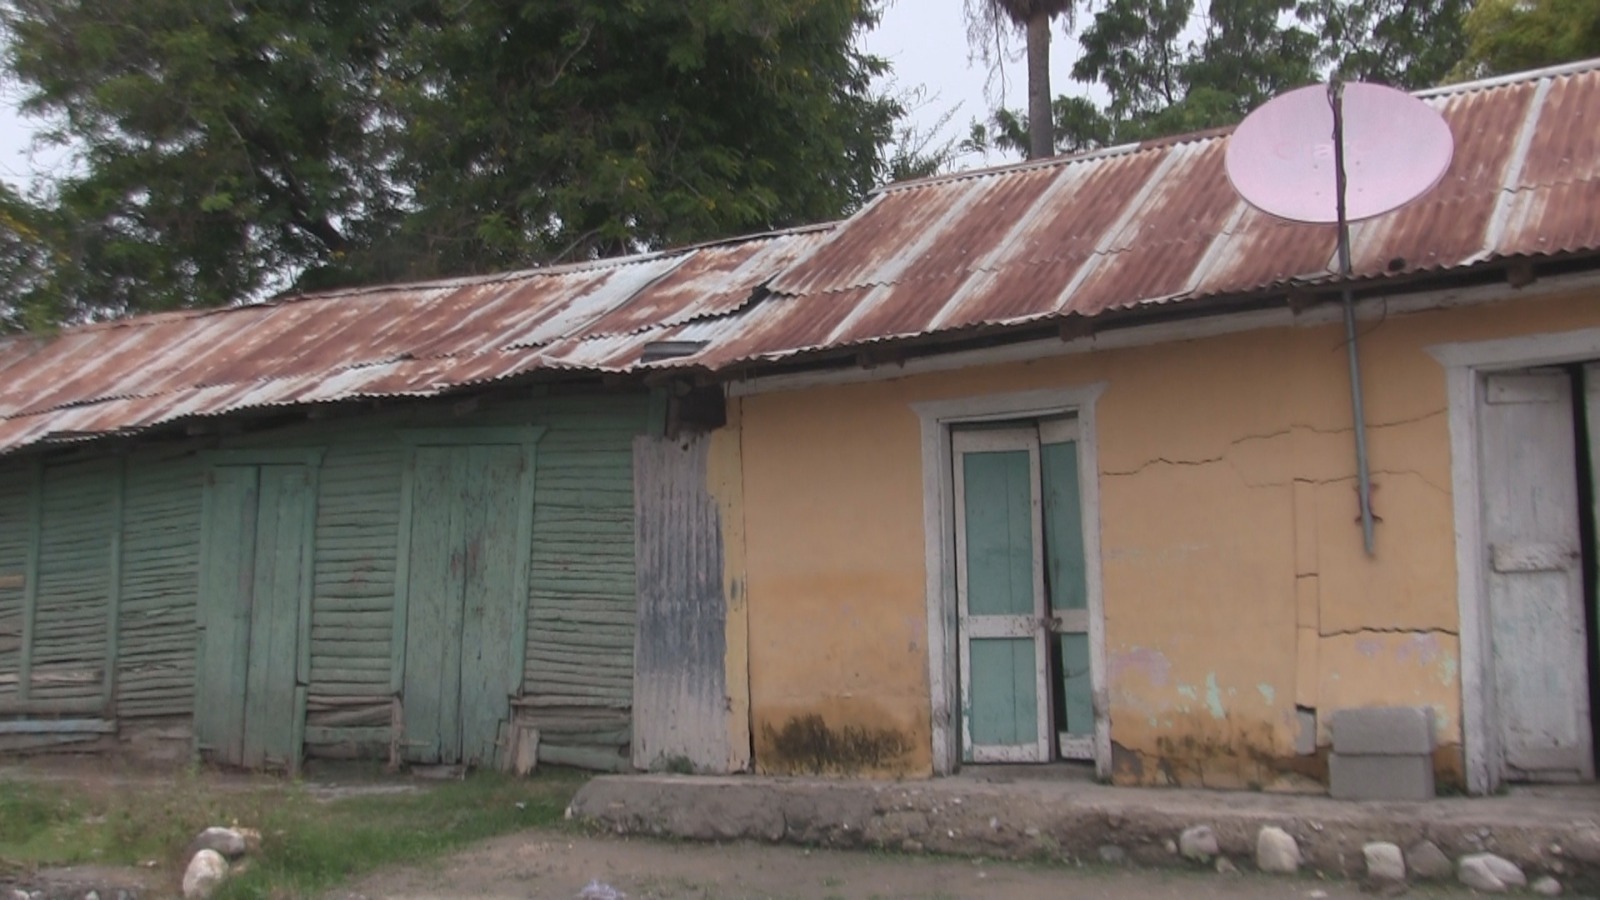 VIDEO: Habitantes en zona vulnerable en Azua se quedan en sus hogares a pesar de efectos de huracán